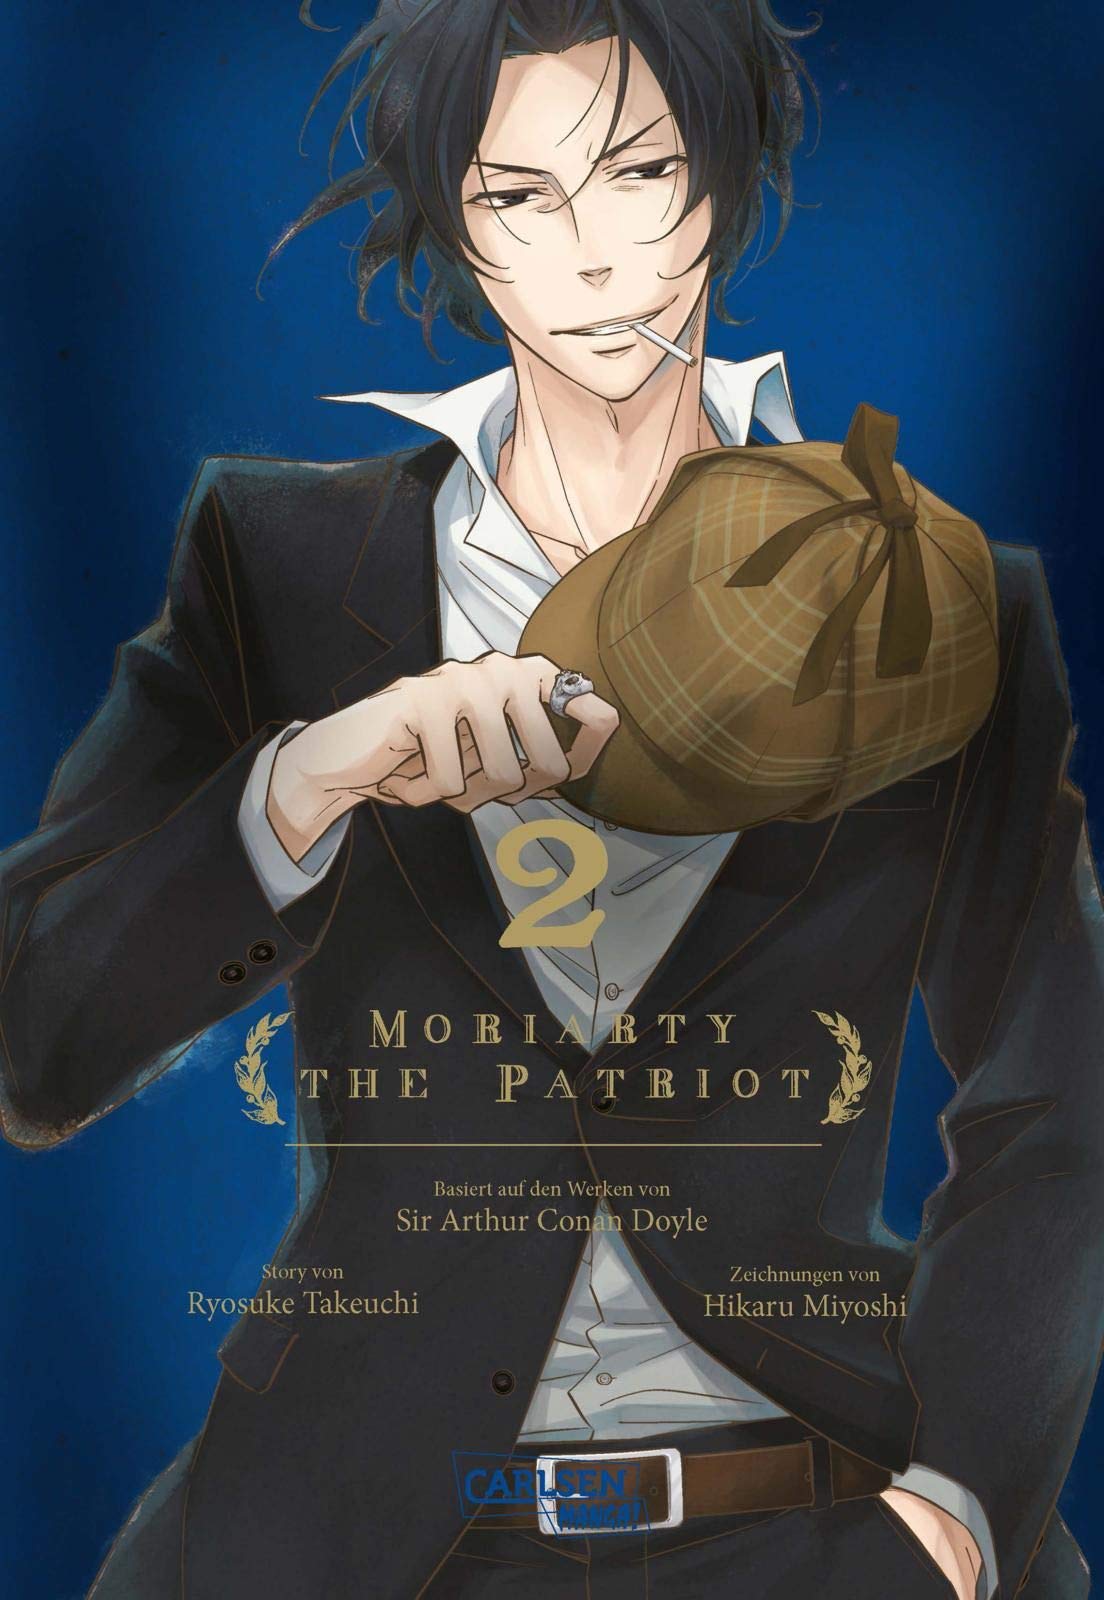 Moriarty the Patriot Anime Casts Hiroki Yasumoto as Mycroft Holmes - News -  Anime News Network